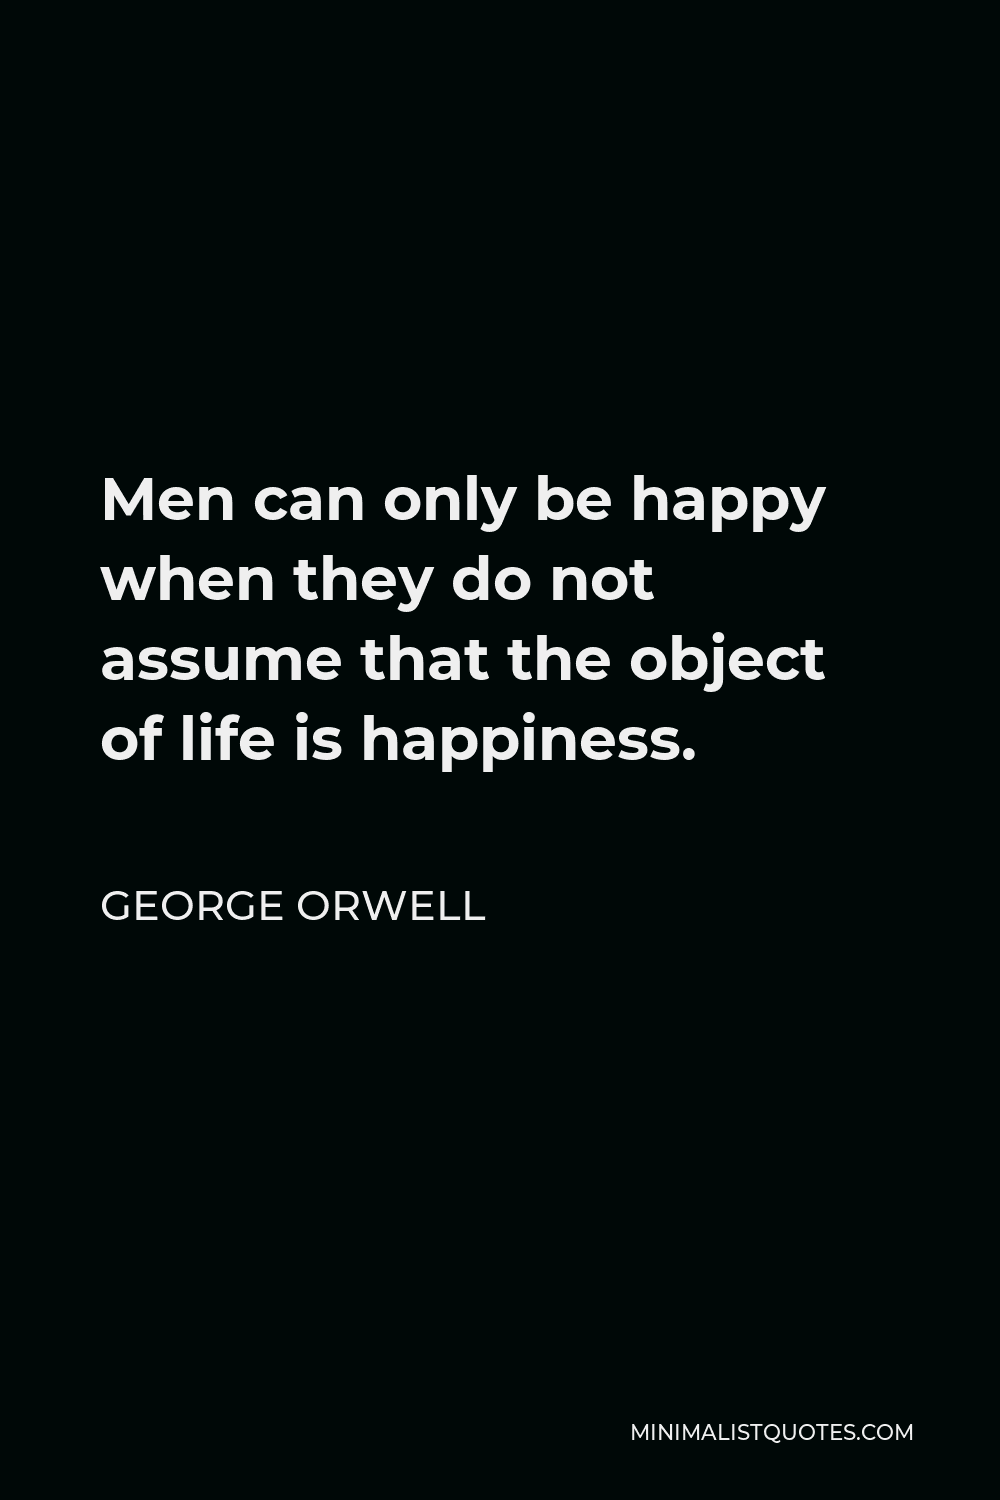 Happy quotes for men